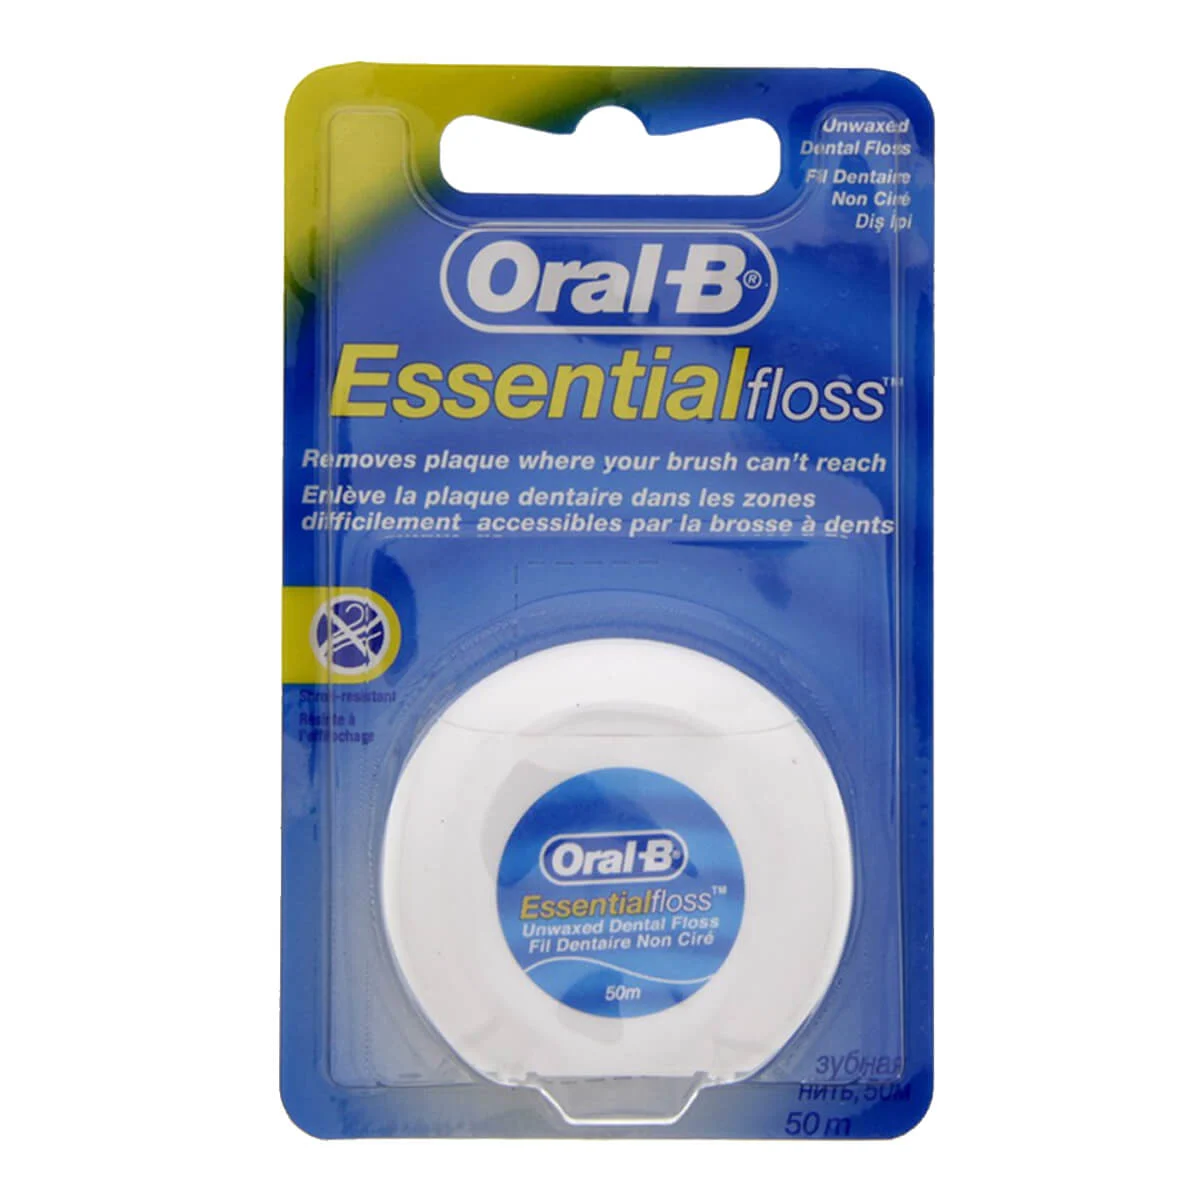 Oral-B Essential dental floss unwaxed 